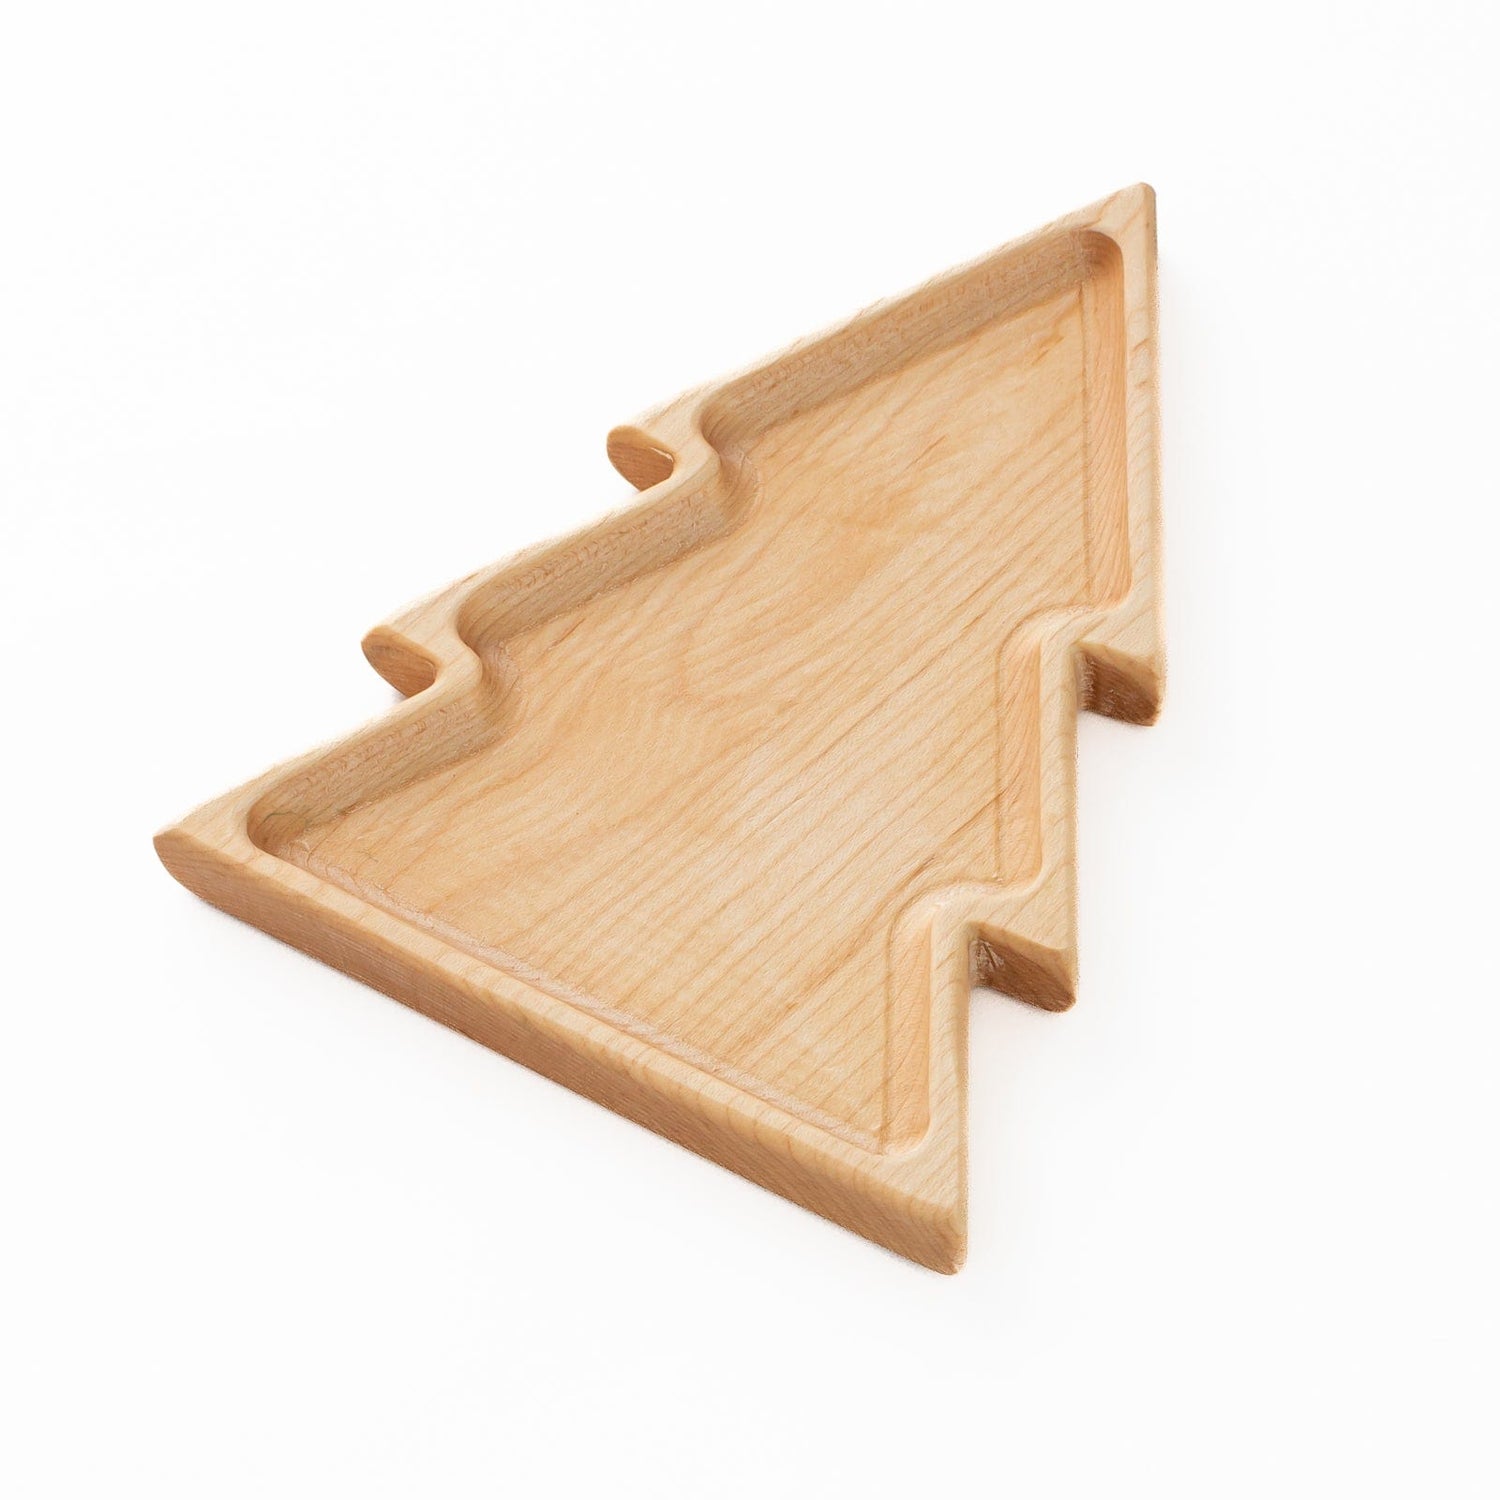 Aw & Co. Sensory Play Wooden Tree Plate / Sensory Tray (Made in Canada)